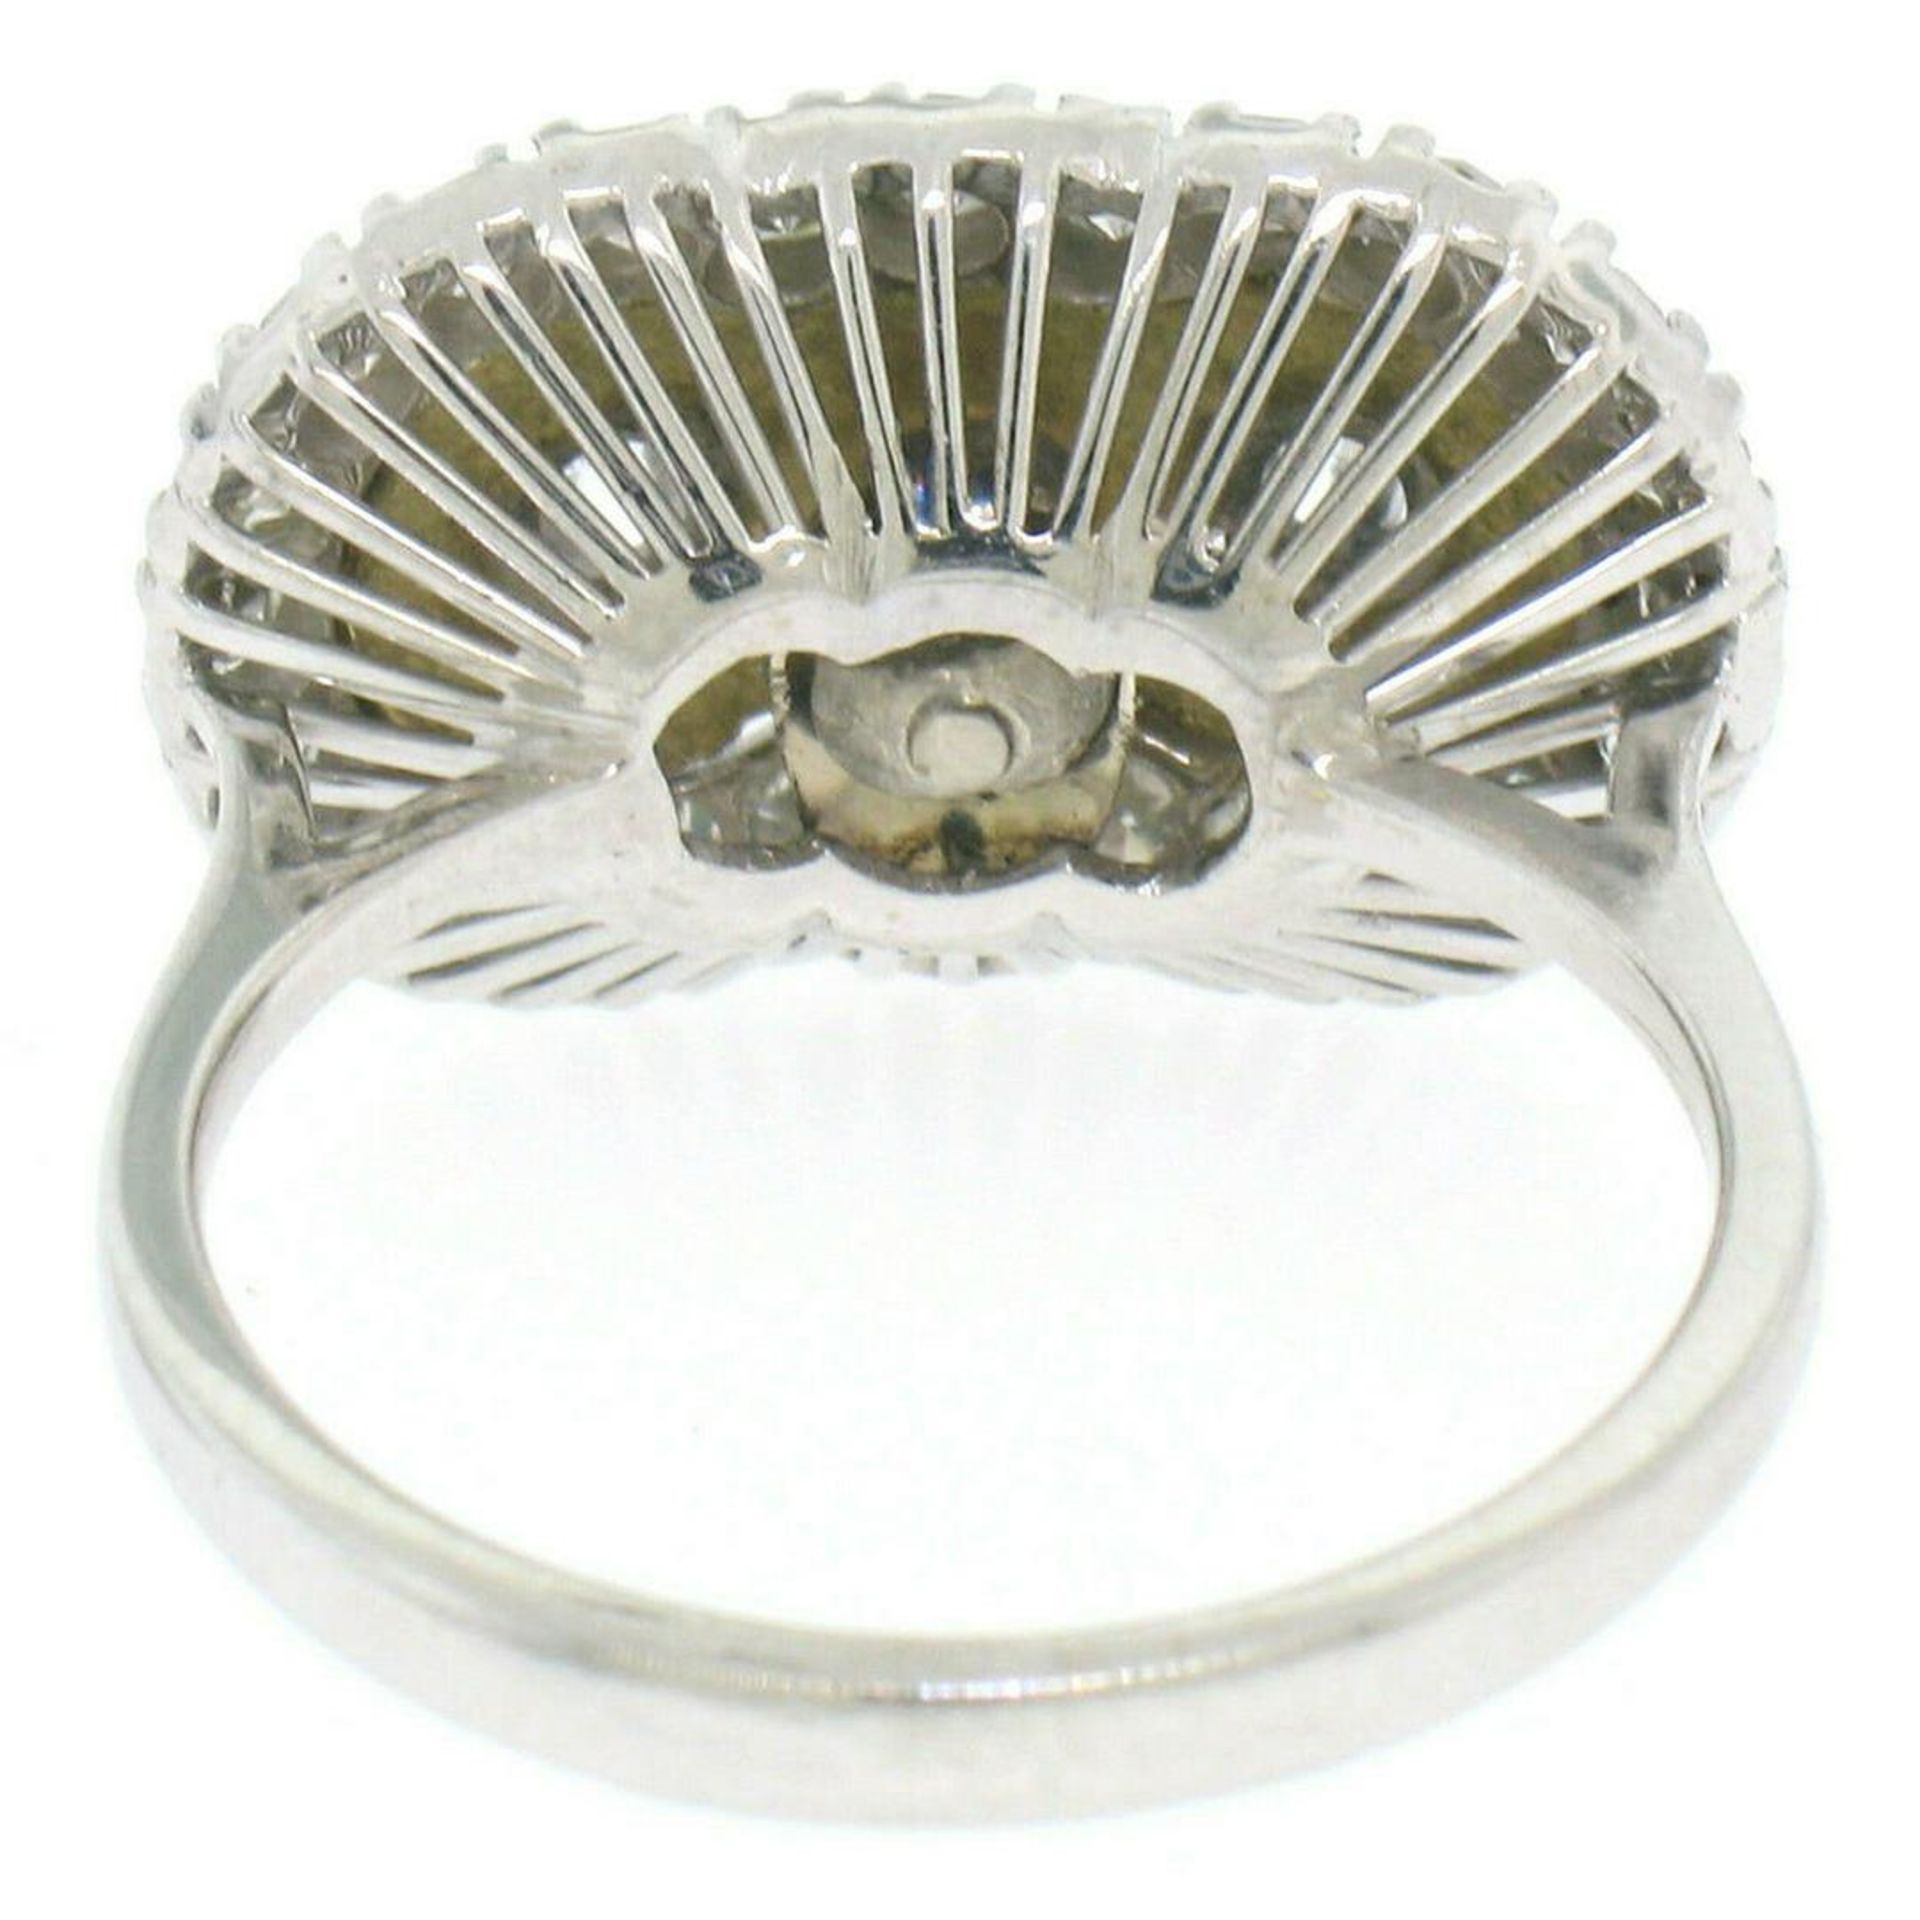 Vintage 18kt White Gold and Blue Enamel 1.15ctw Diamond Ring - Image 5 of 5